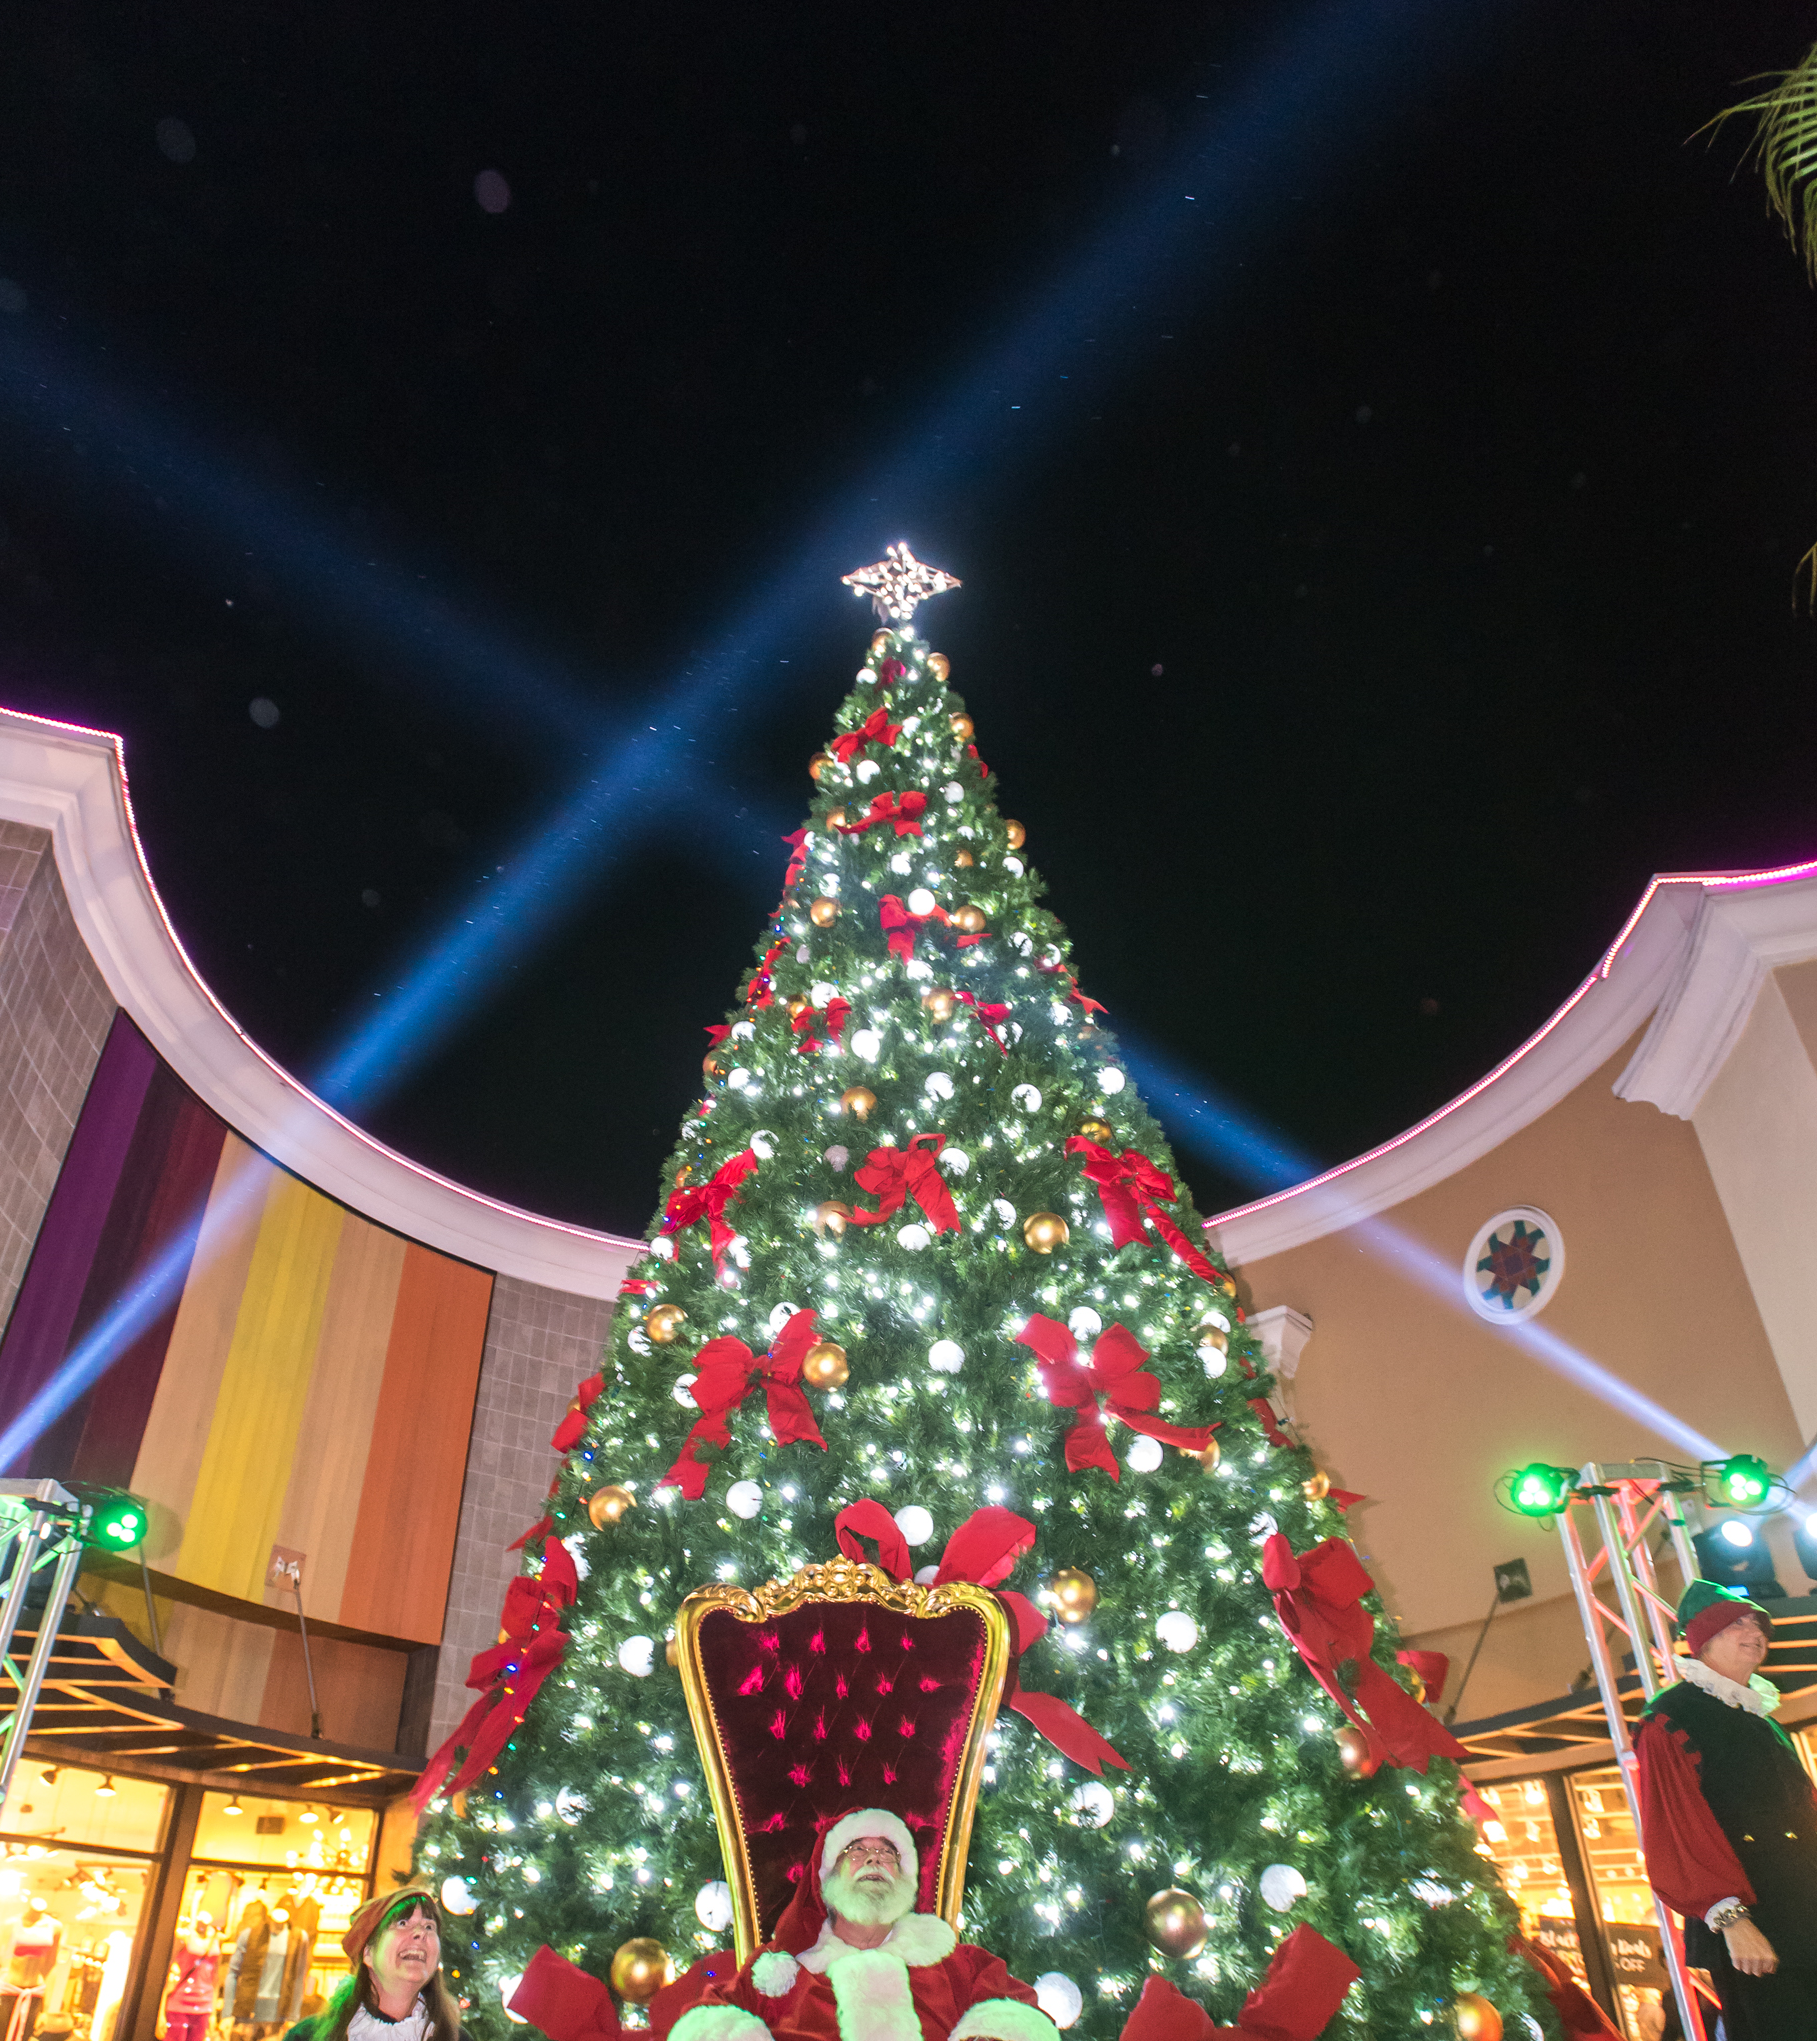  Christmas tree lighting ceremony outdoor mall 